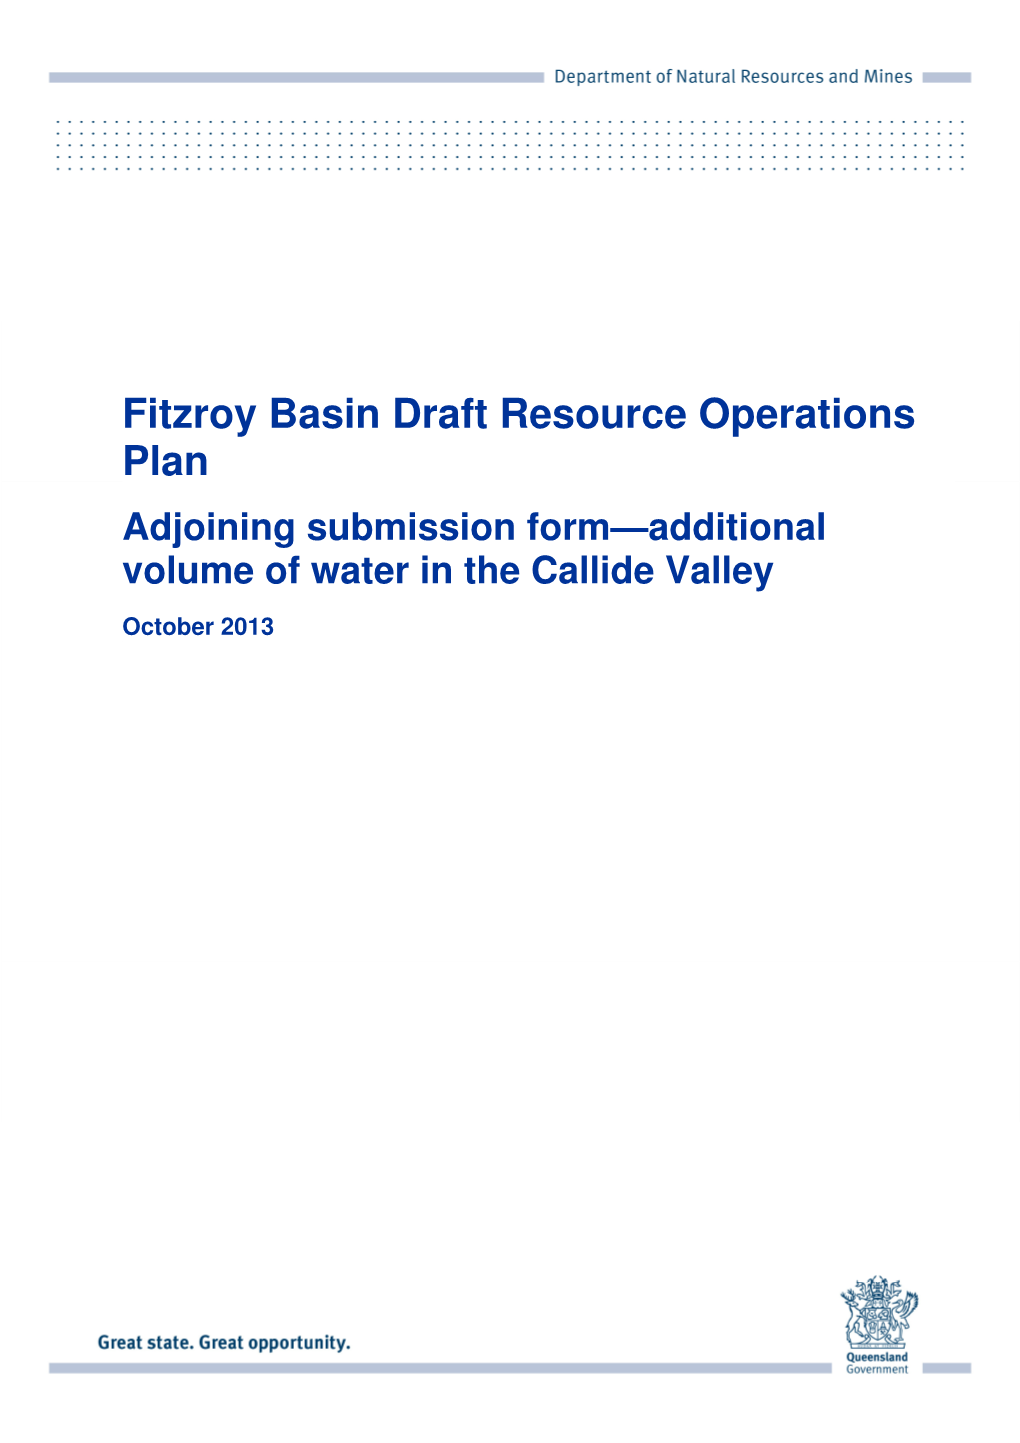 Fitzroy Basin Draft Resource Operations Plan